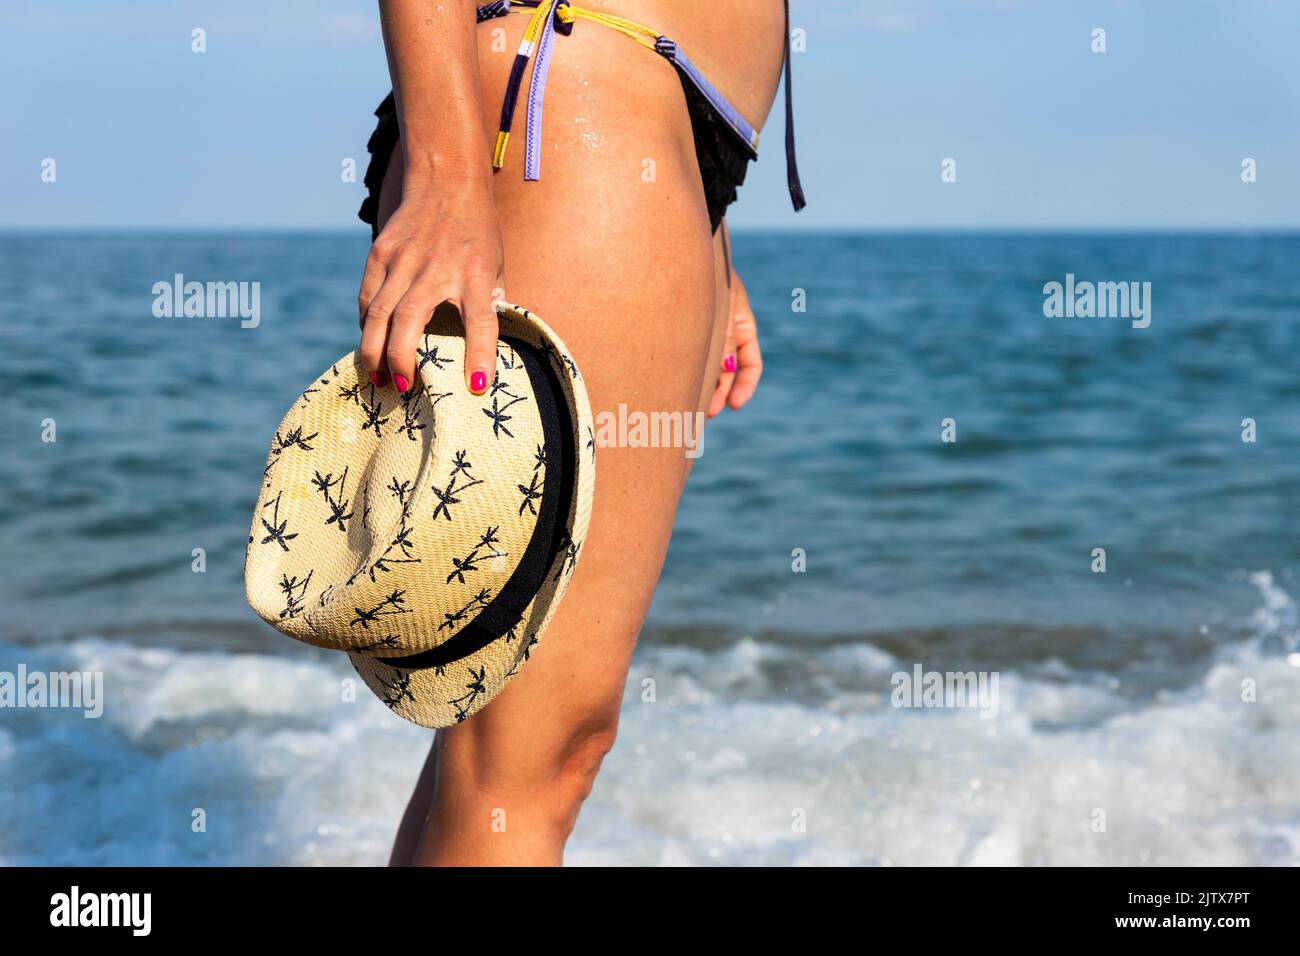 Woman in bikini holding straw sun hat at sunny beach at sea. Travel and fashion concept. Stock Photo